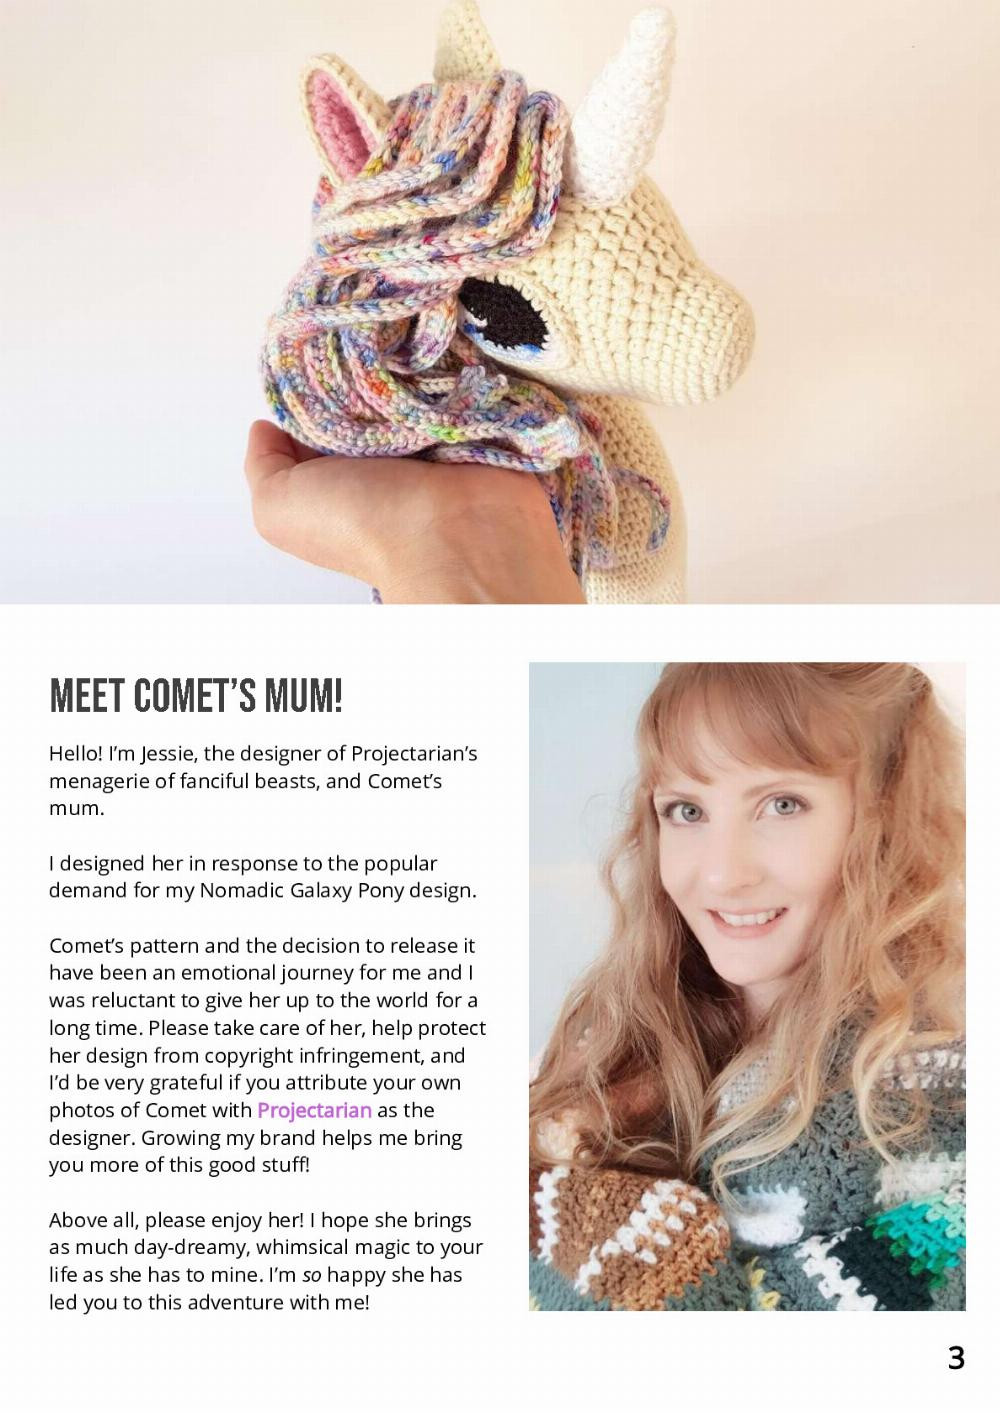 Comet the Unicorn’s crochet pattern